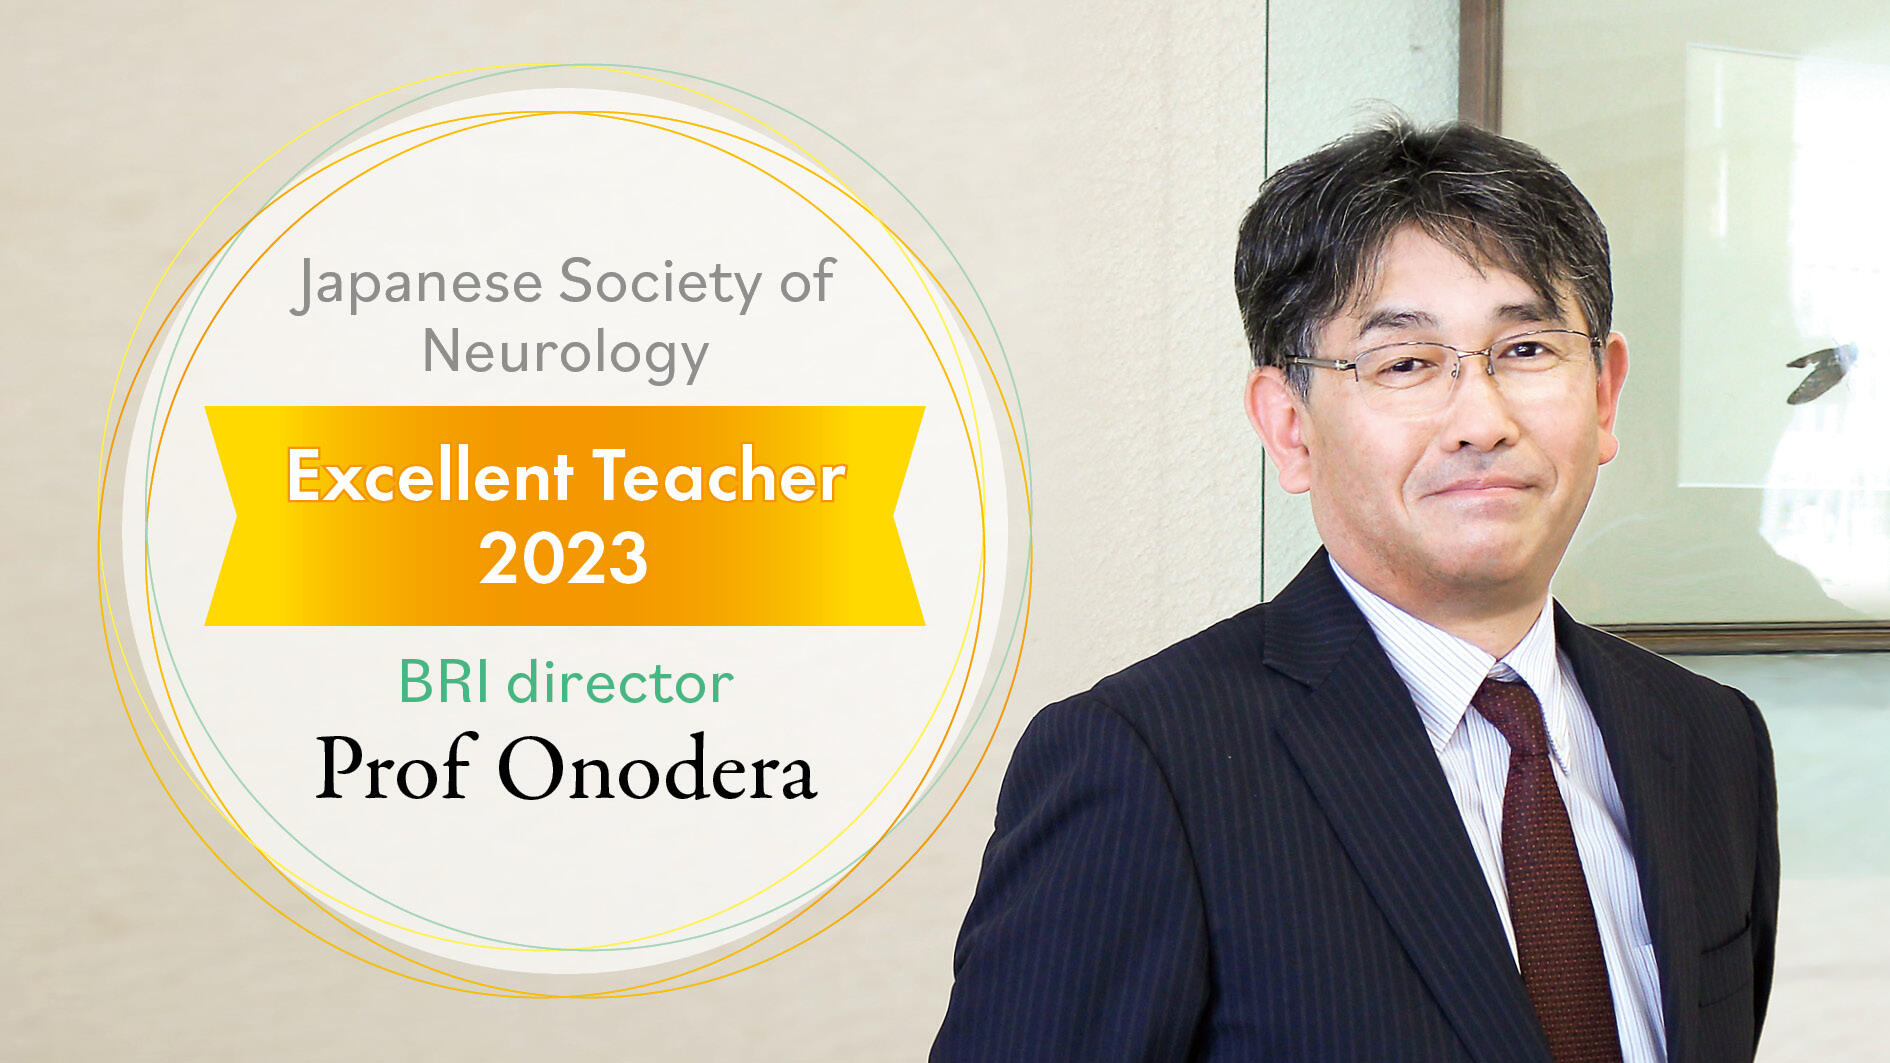 Prof Onodera awarded Japanese Society of Neurology's Excellent Teacher 2023